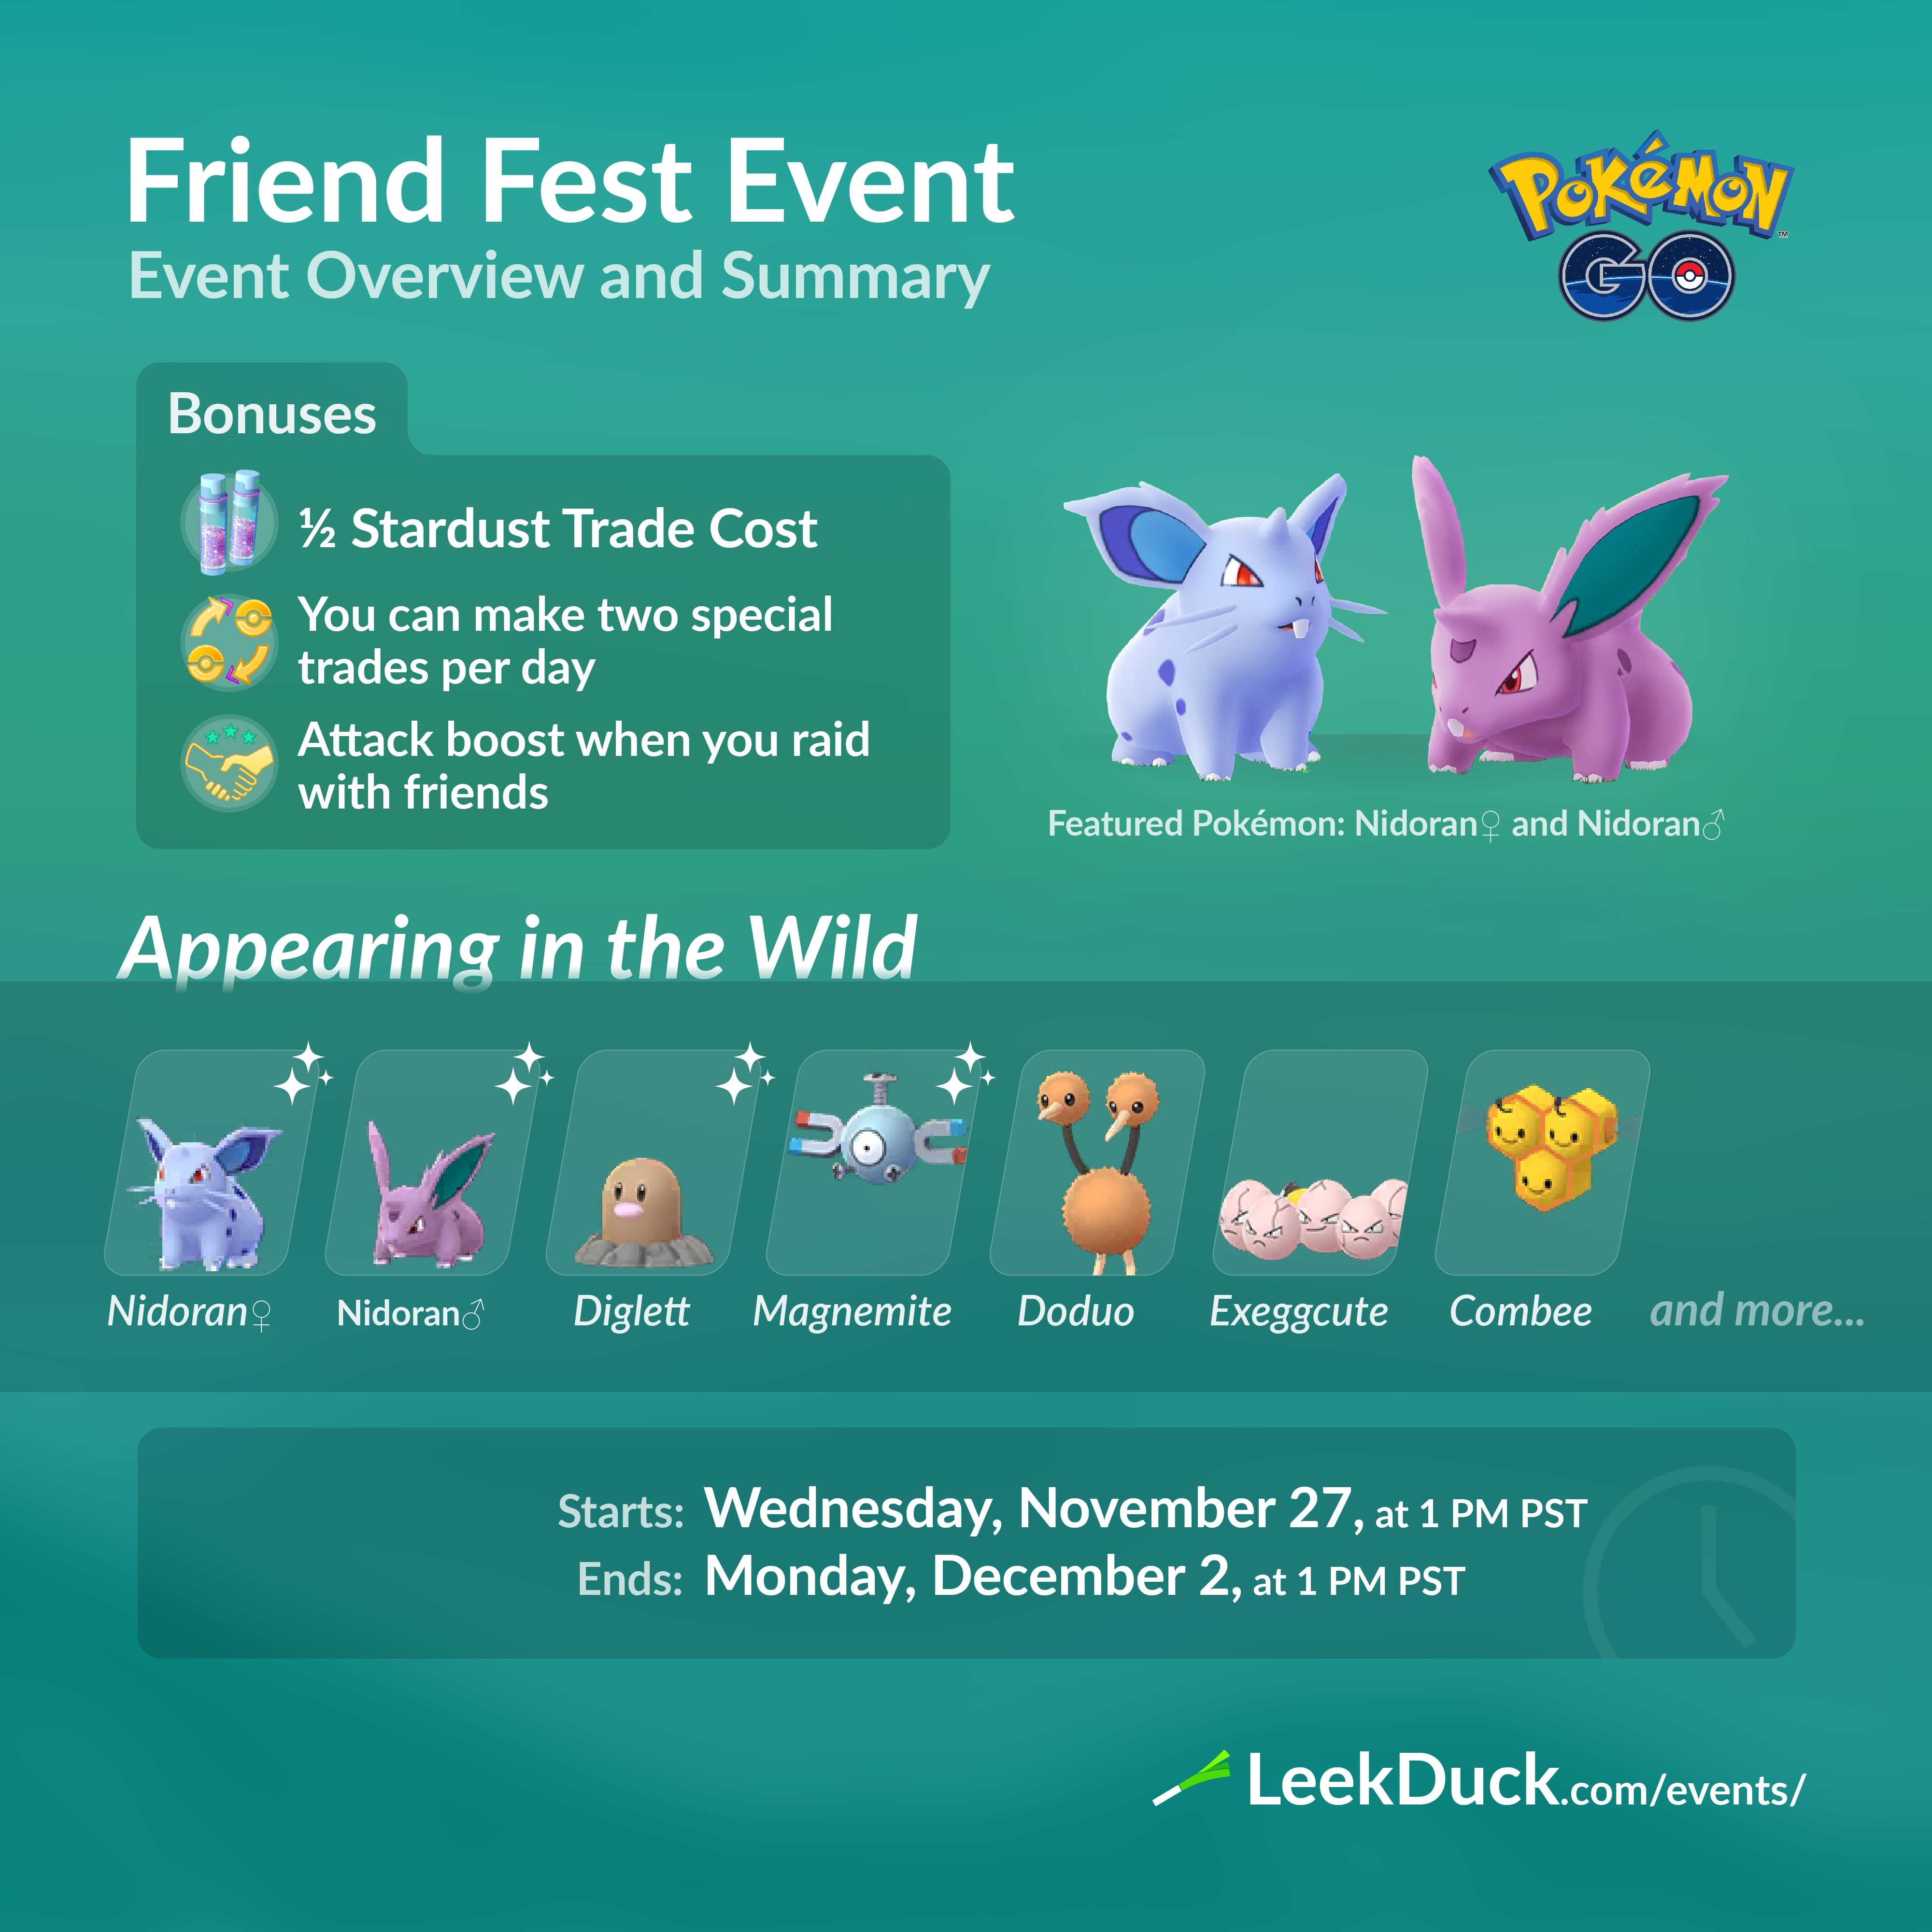 Friend Fest Leek Duck | GO News Resources